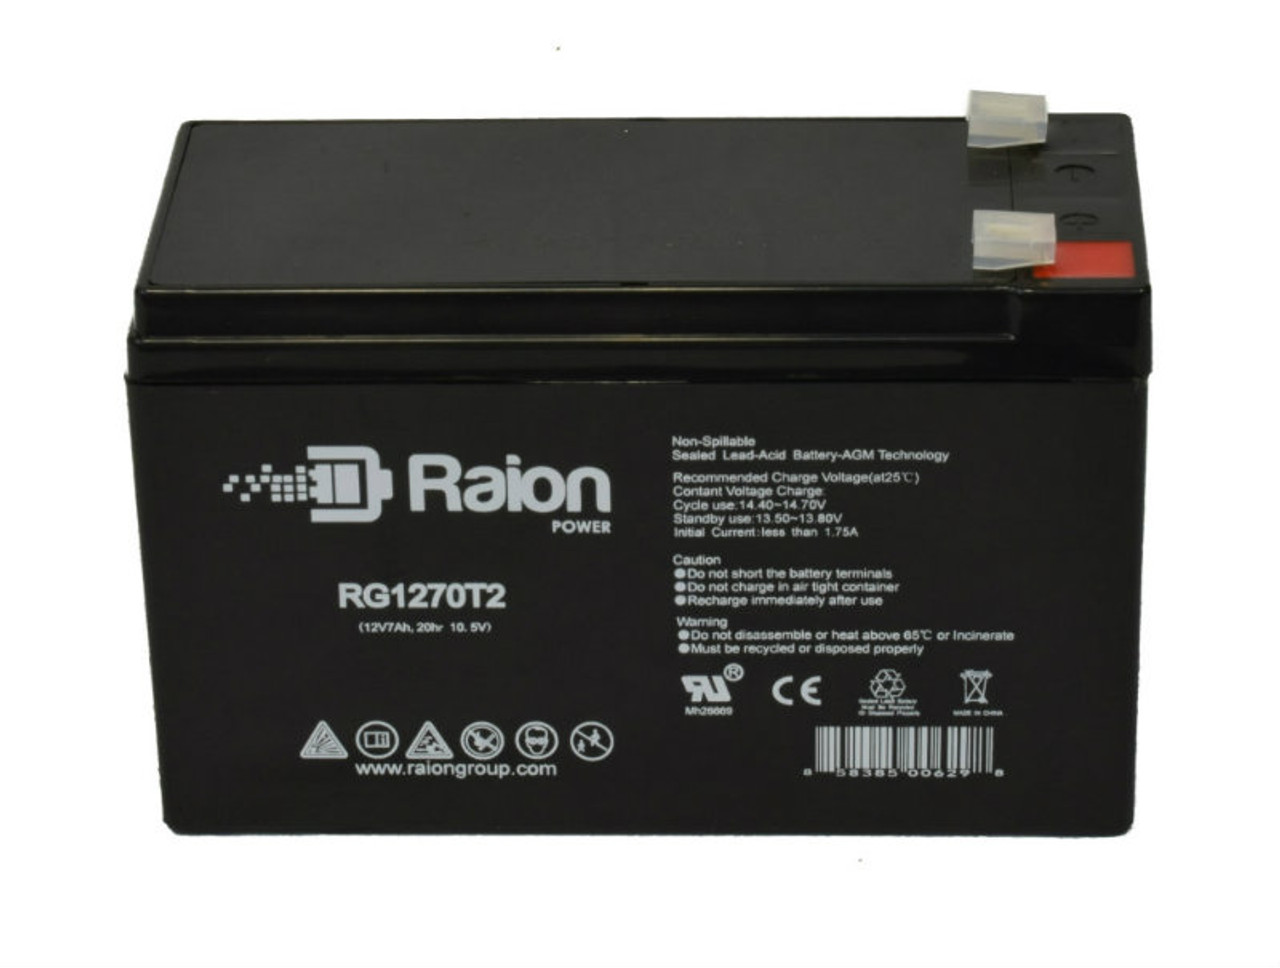 Raion Power RG1270T2 12V 7Ah Lead Acid Battery for Daymak Ferrari F12 Berlinetta